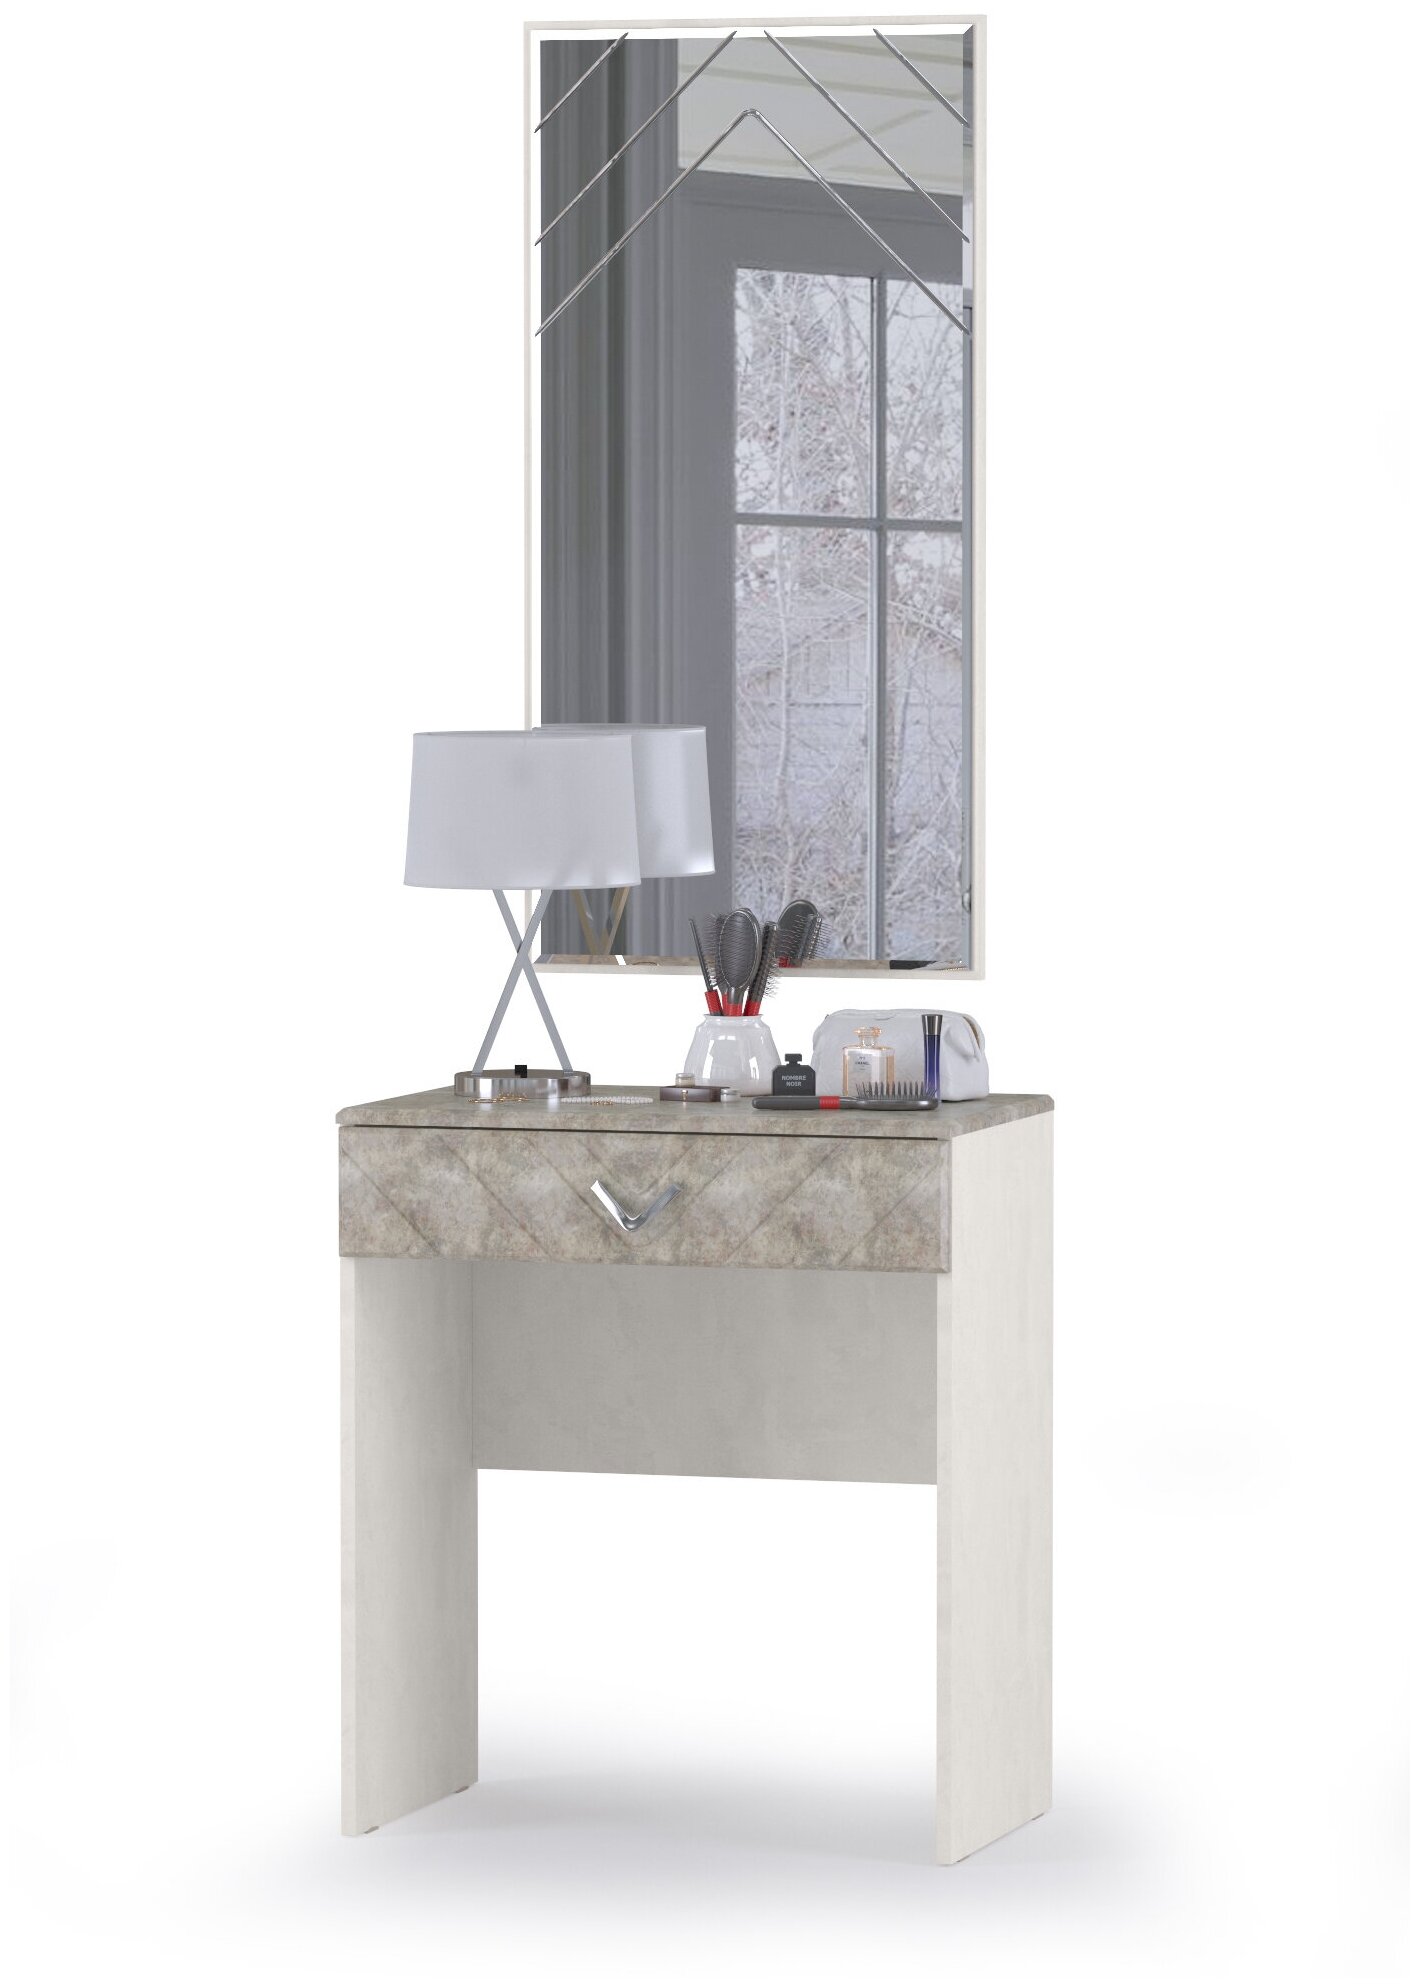 Стол туалетный с зеркалом Амели, цвет шёлковый камень/бетон чикаго беж, ШхГхВ 65х41х185 см. - фотография № 1